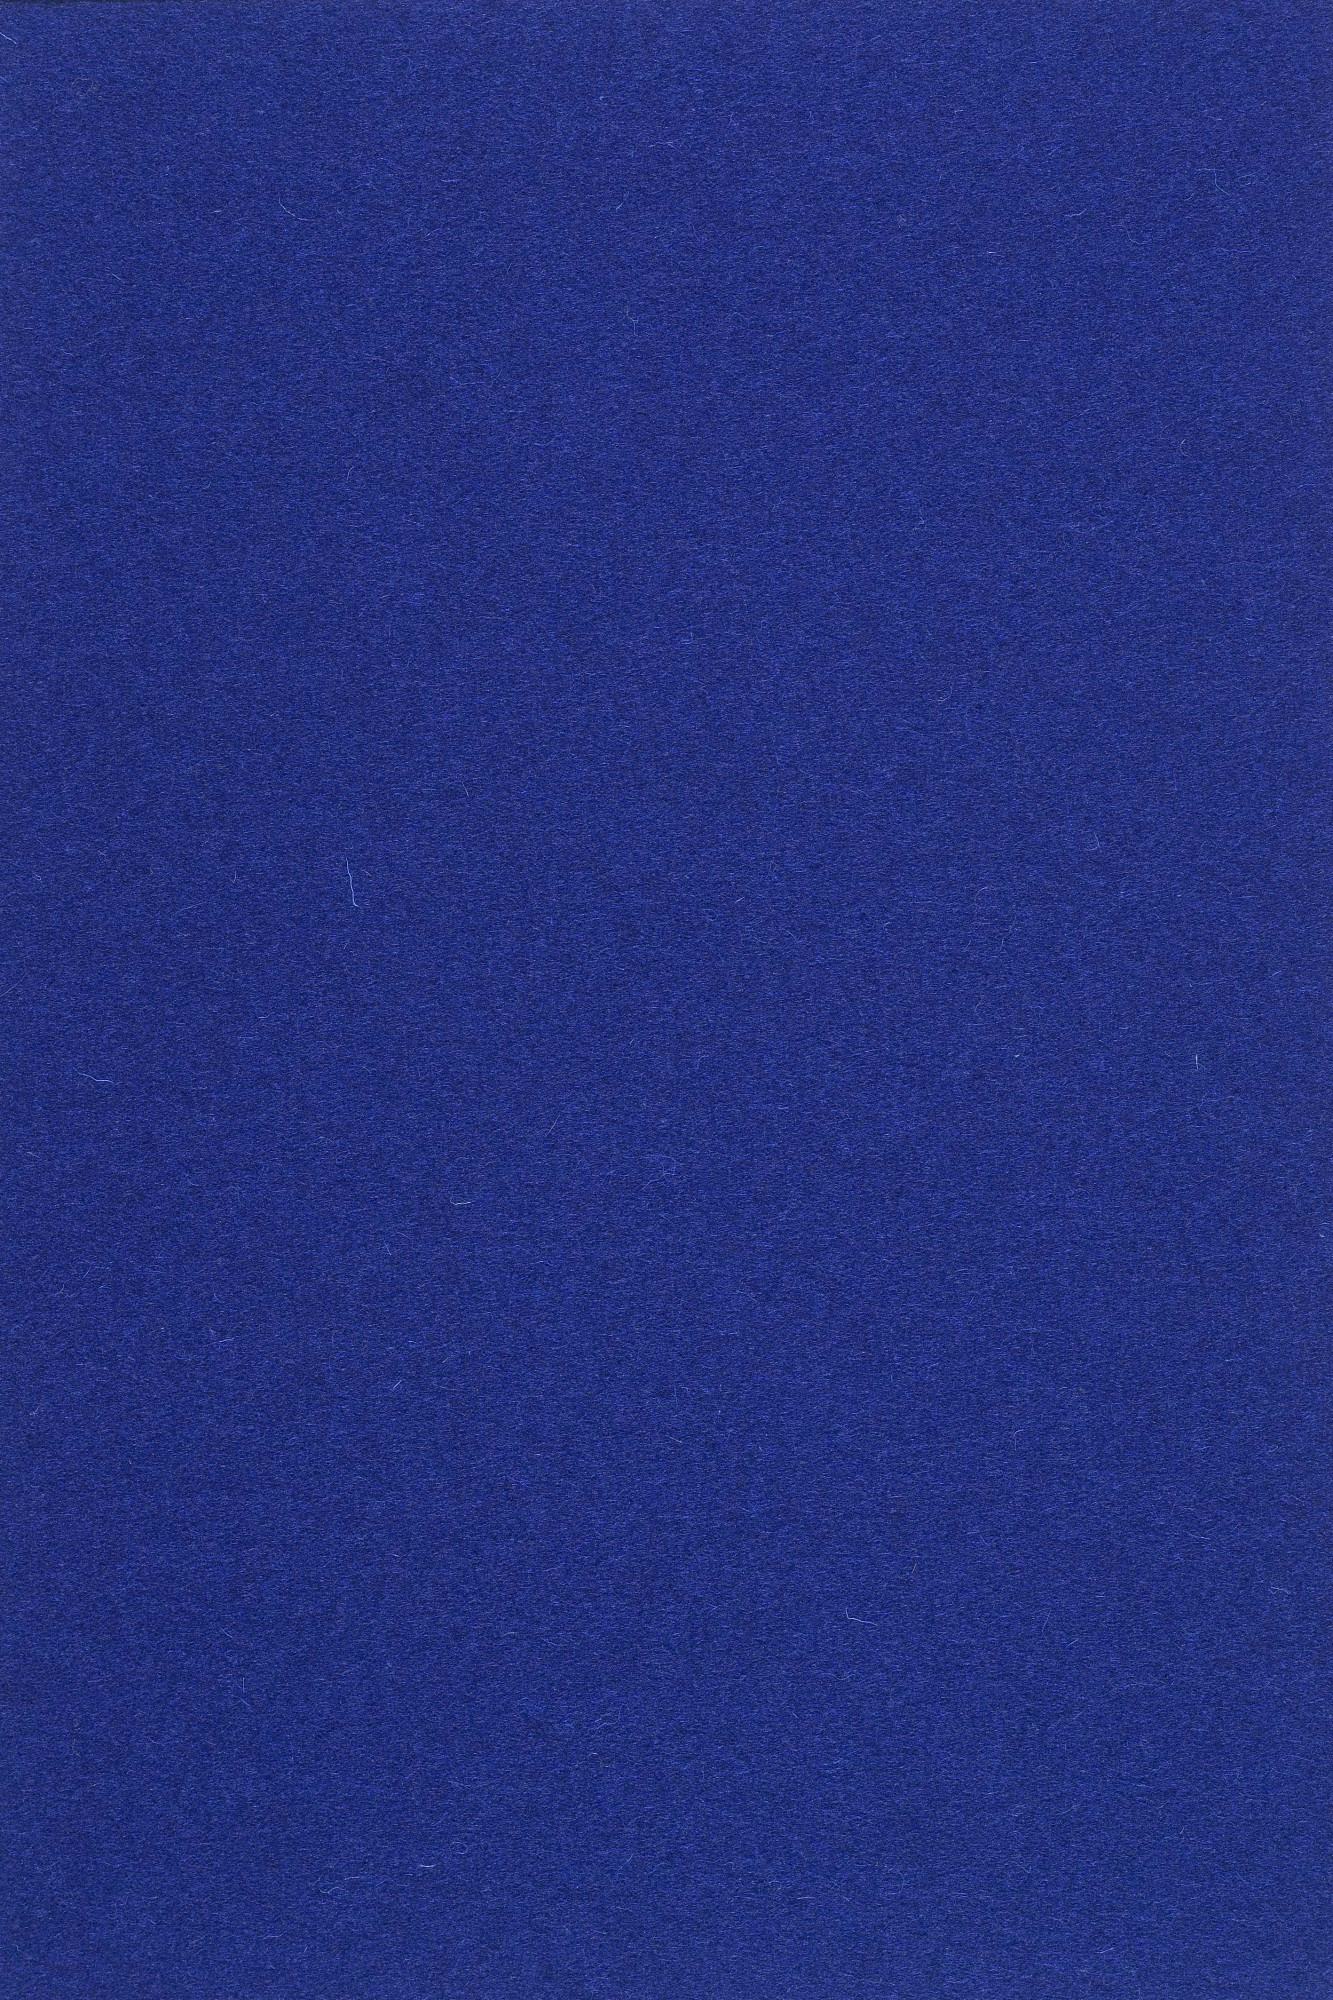 Fabric sample Divina 3 791 blue